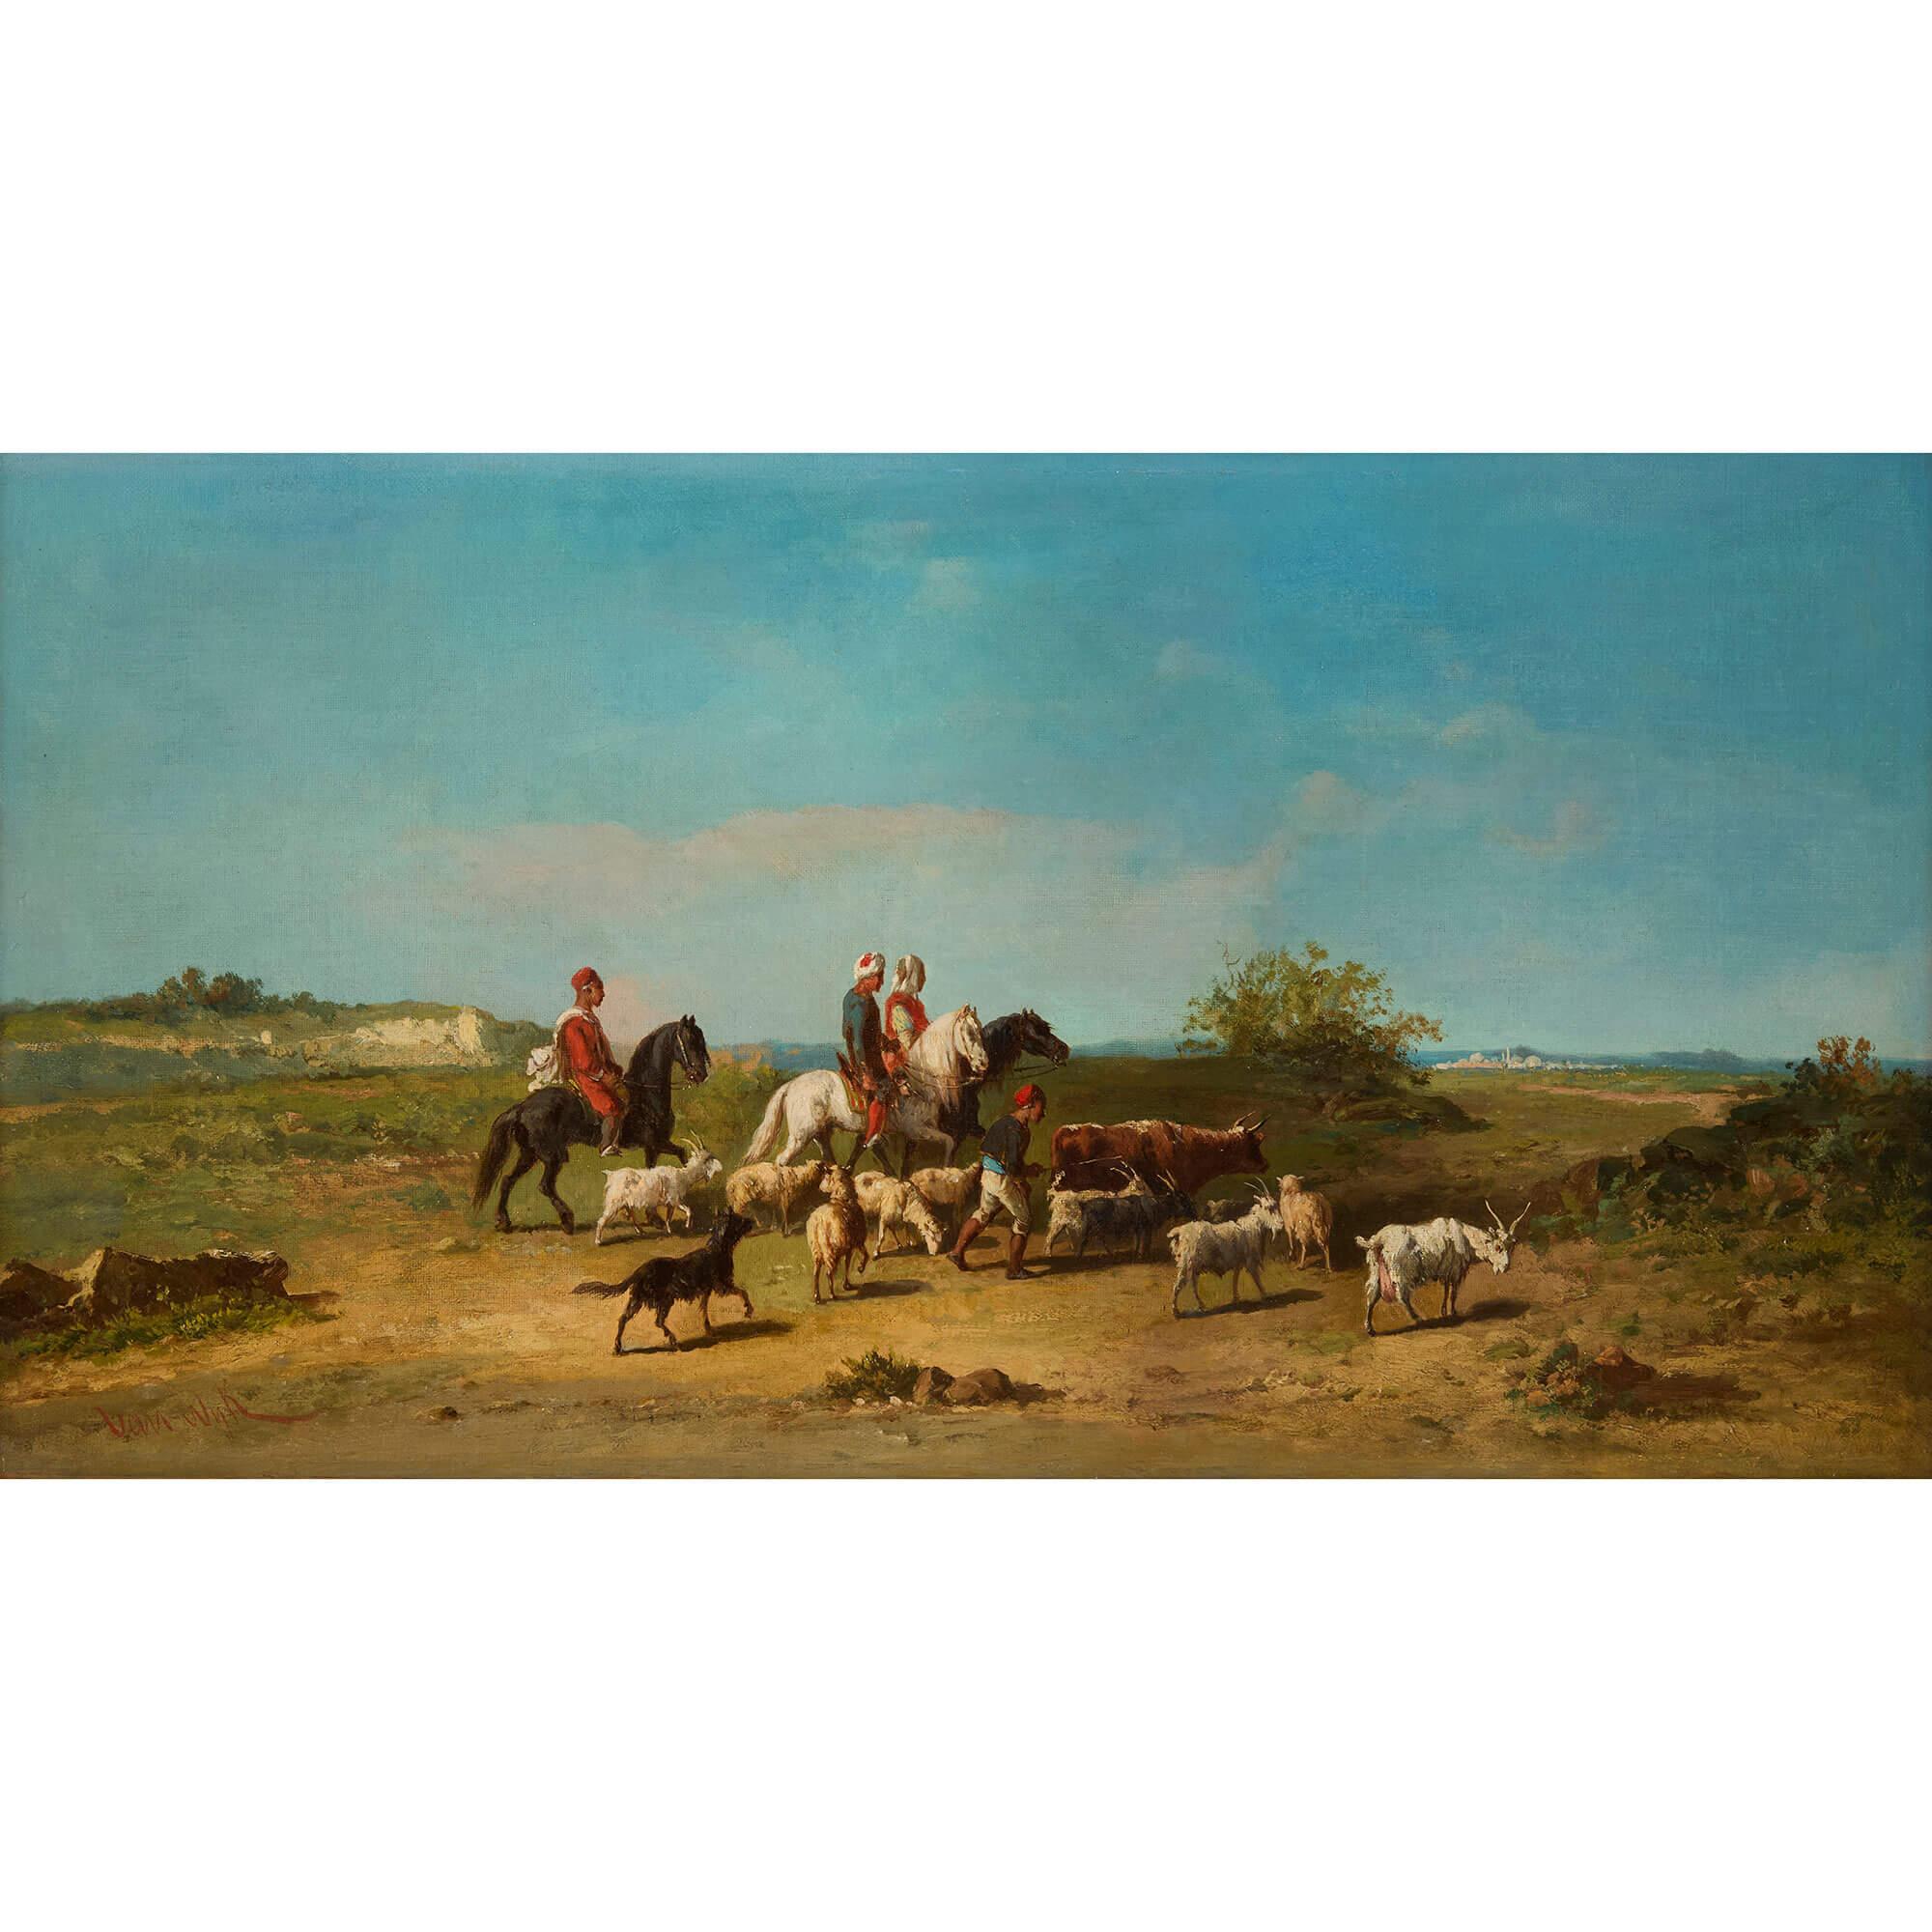 Set of Four Orientalist Landscape Paintings by van Wijk  For Sale 2